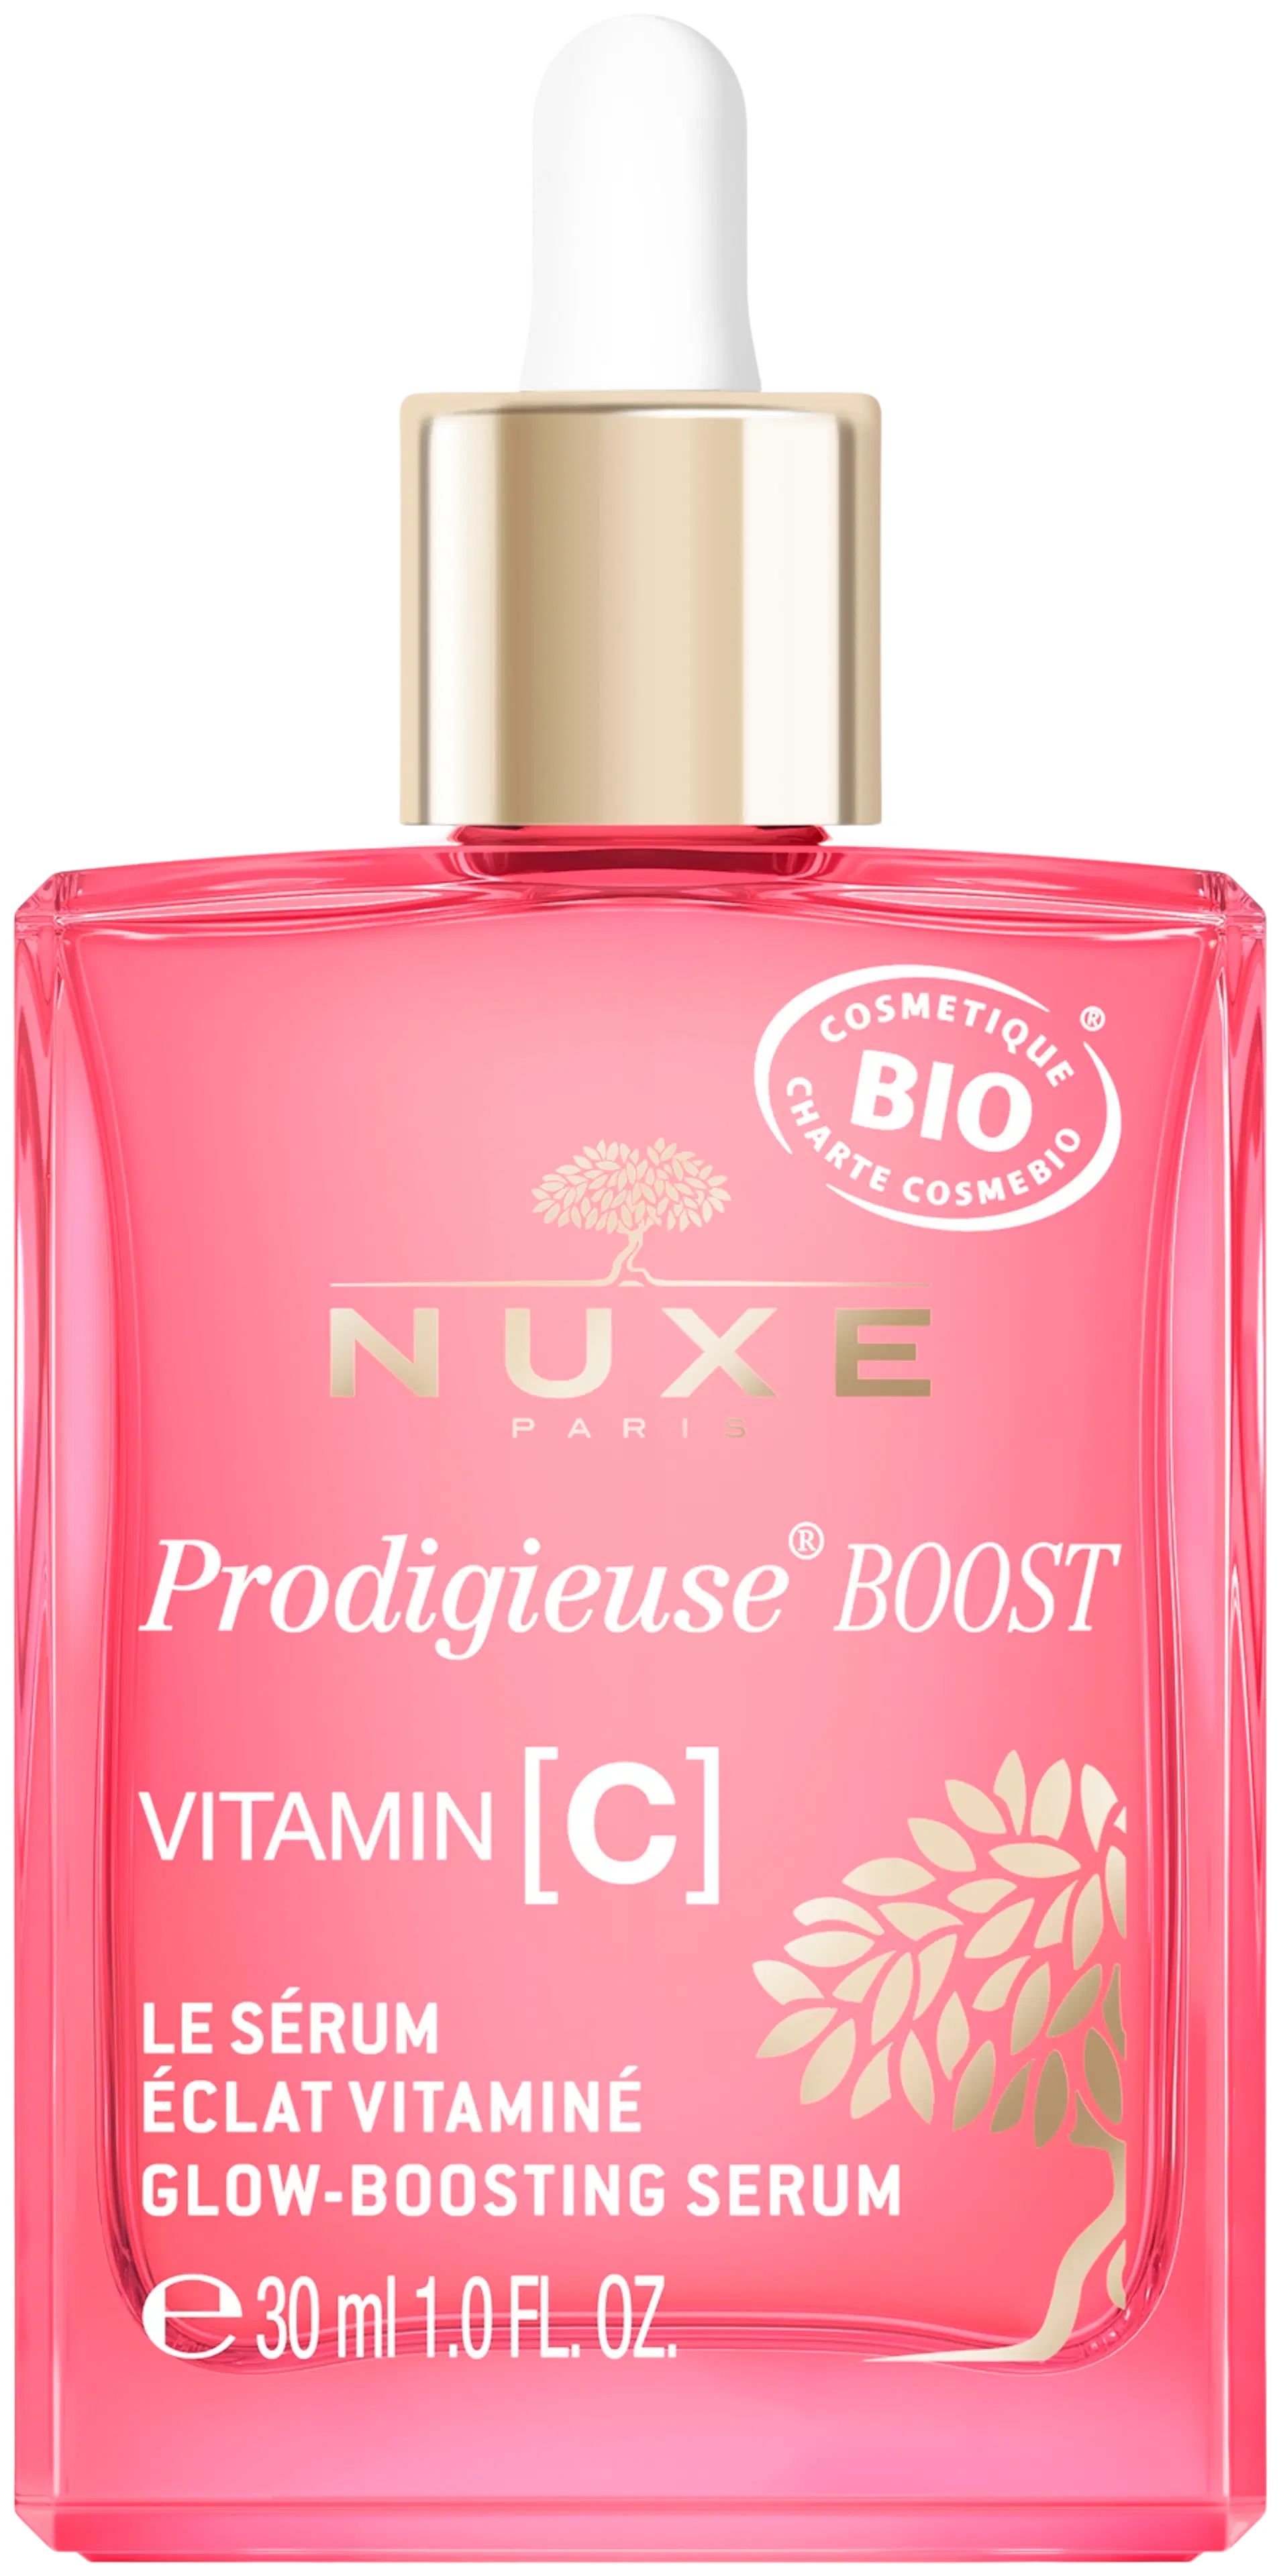 NUXE Prodigieuse Boost BIO Vitamin C Glow-Boosting Serum C-vitamiiniseerumi kasvoille 30 ml